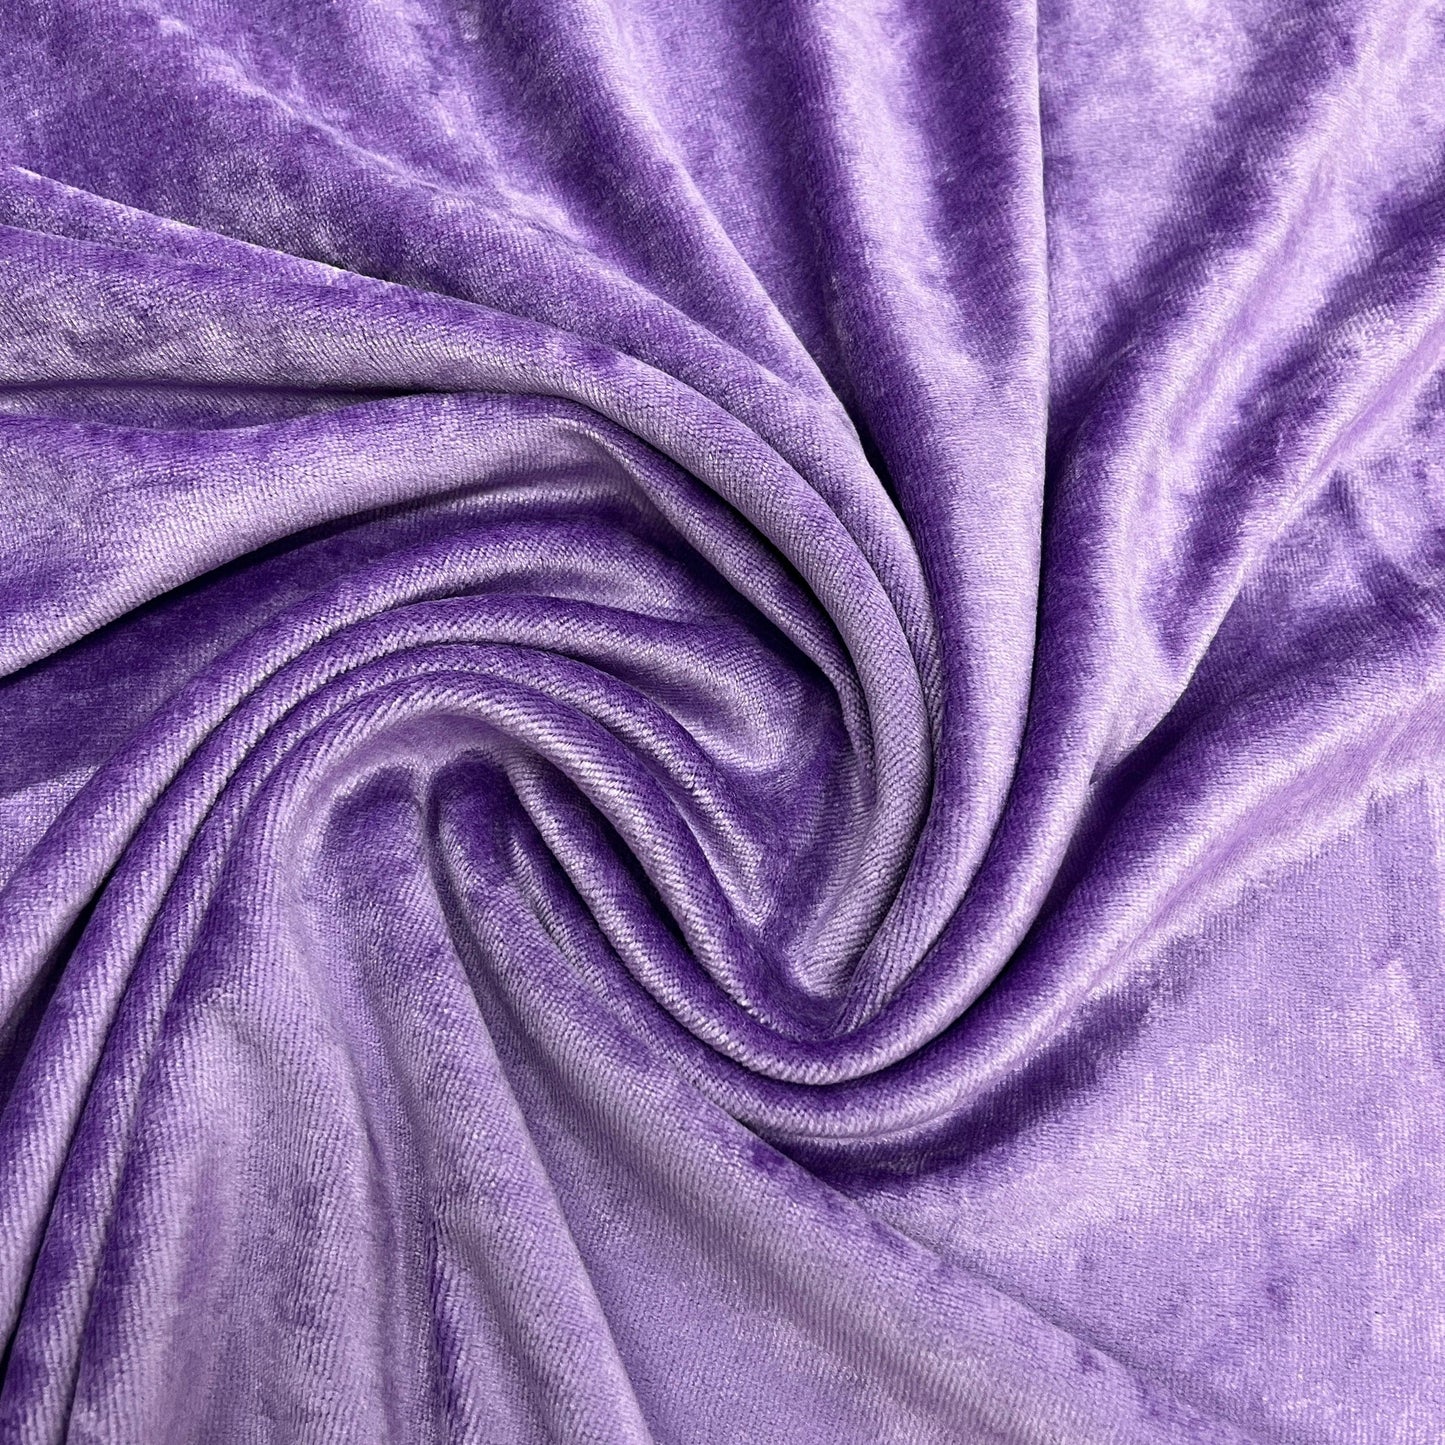 Purple Bamboo Velour Fabric - 280 GSM, $11.91/yd, 15 Yards - Nature's Fabrics